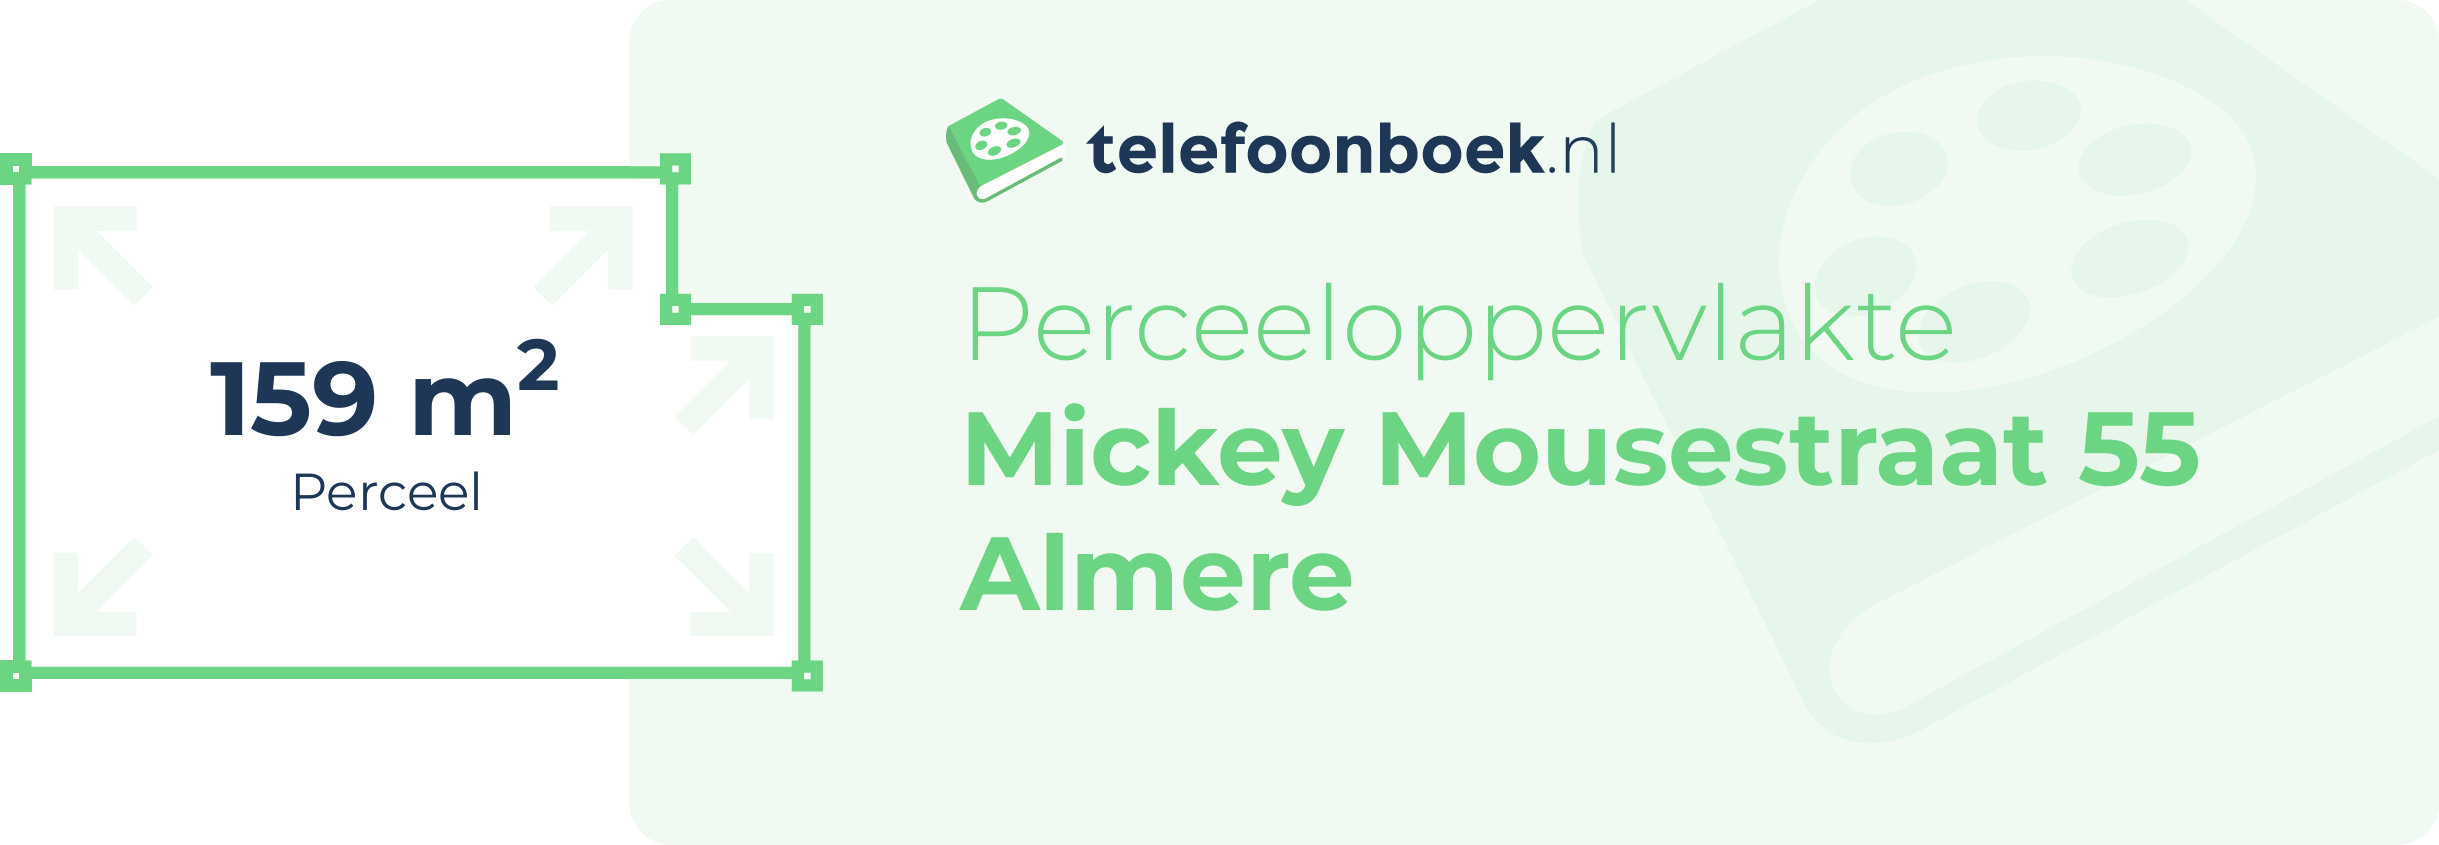 Perceeloppervlakte Mickey Mousestraat 55 Almere